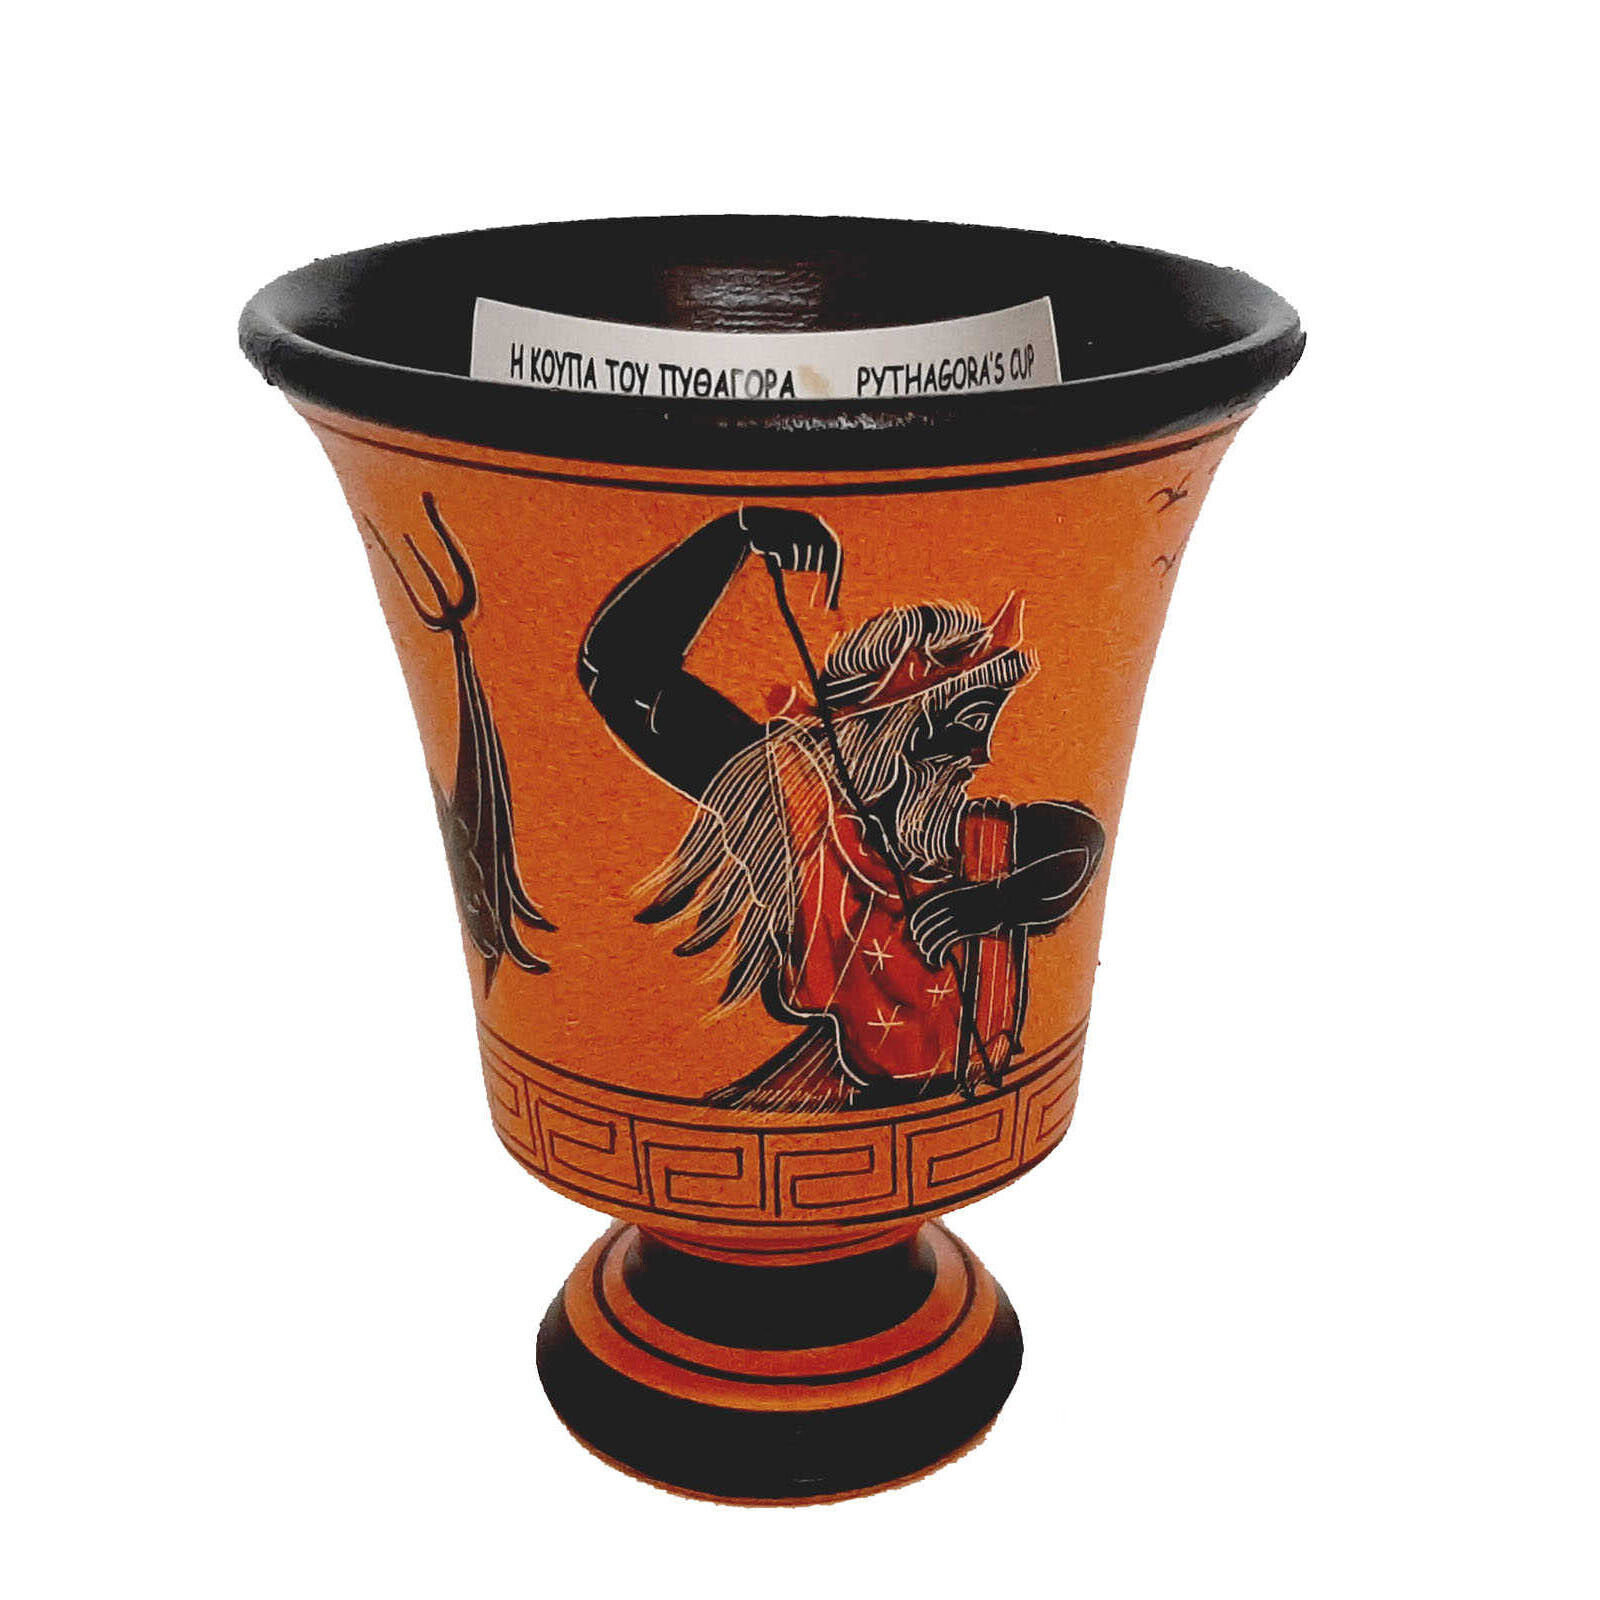 Pythagorean cup,Greedy Cup 11cm,Orange background shows God Poseidon